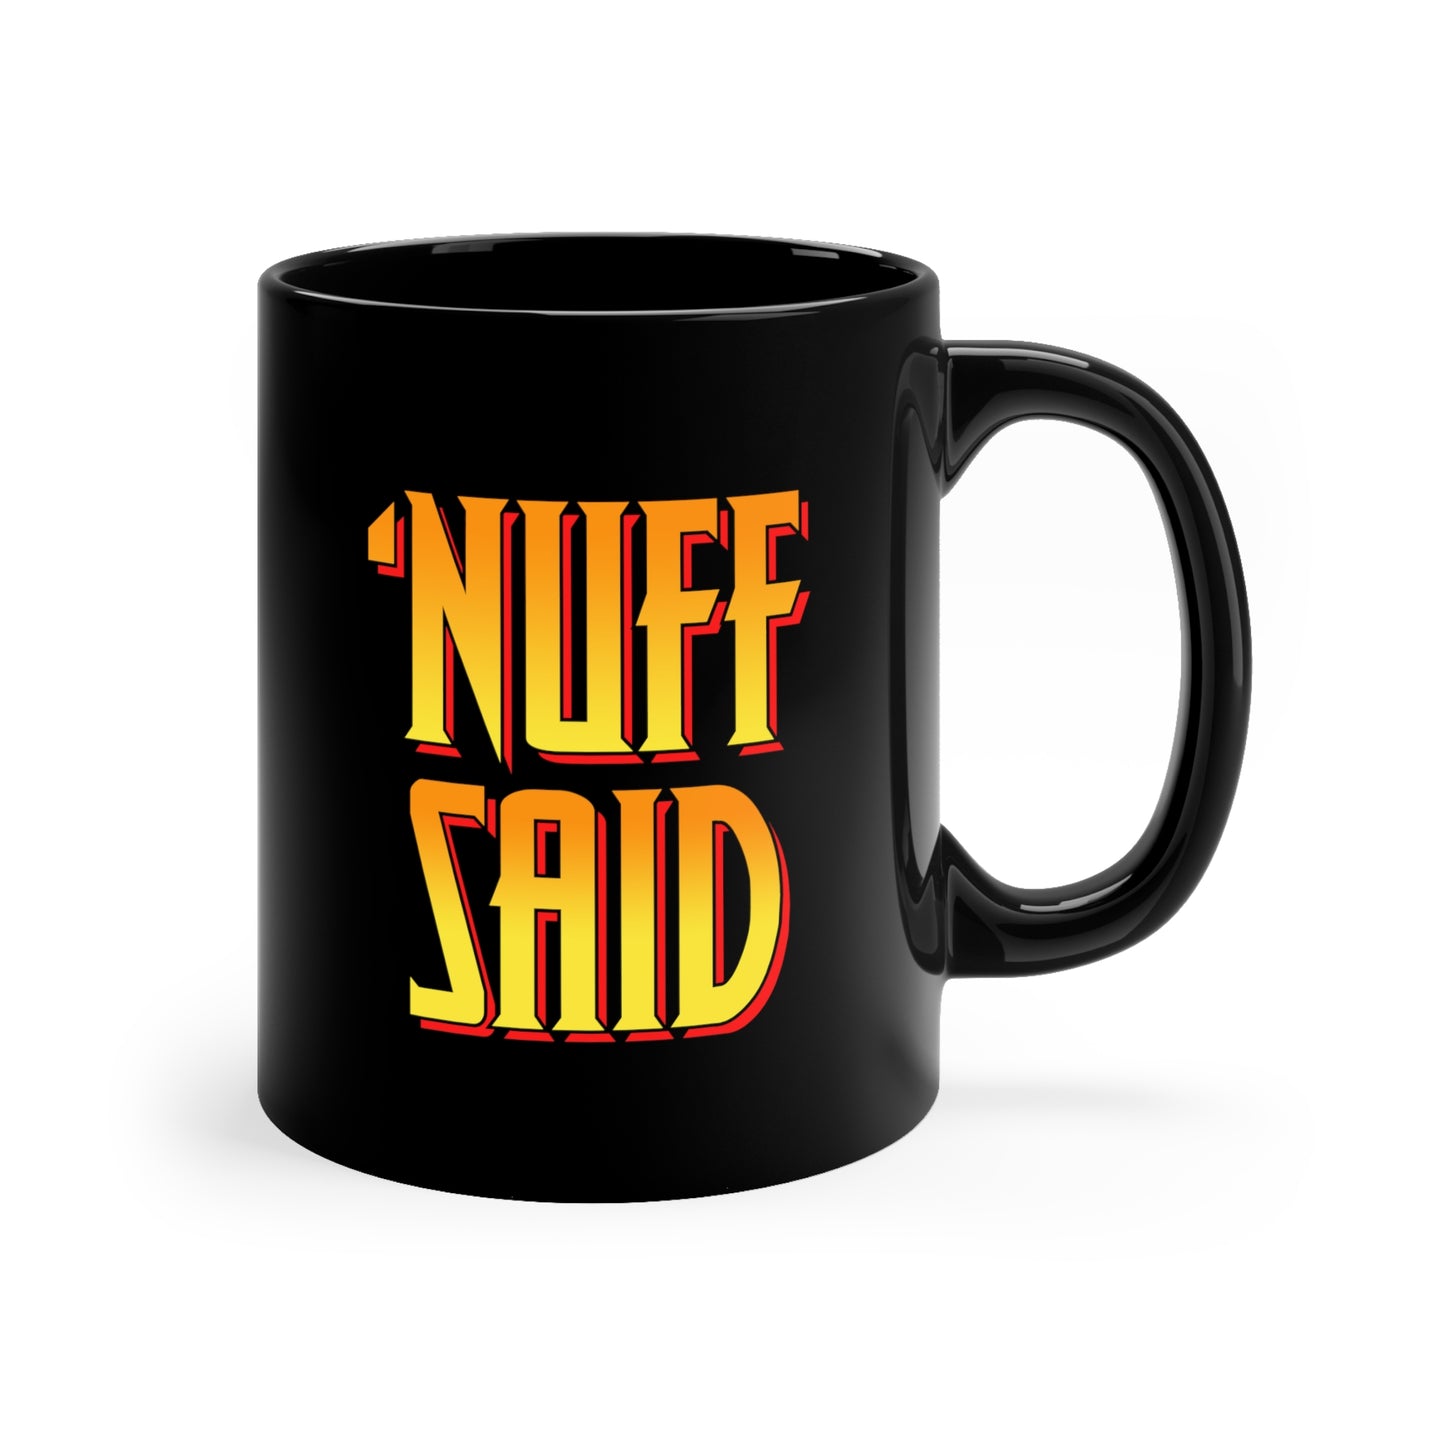 Nuff Said ceramic mug